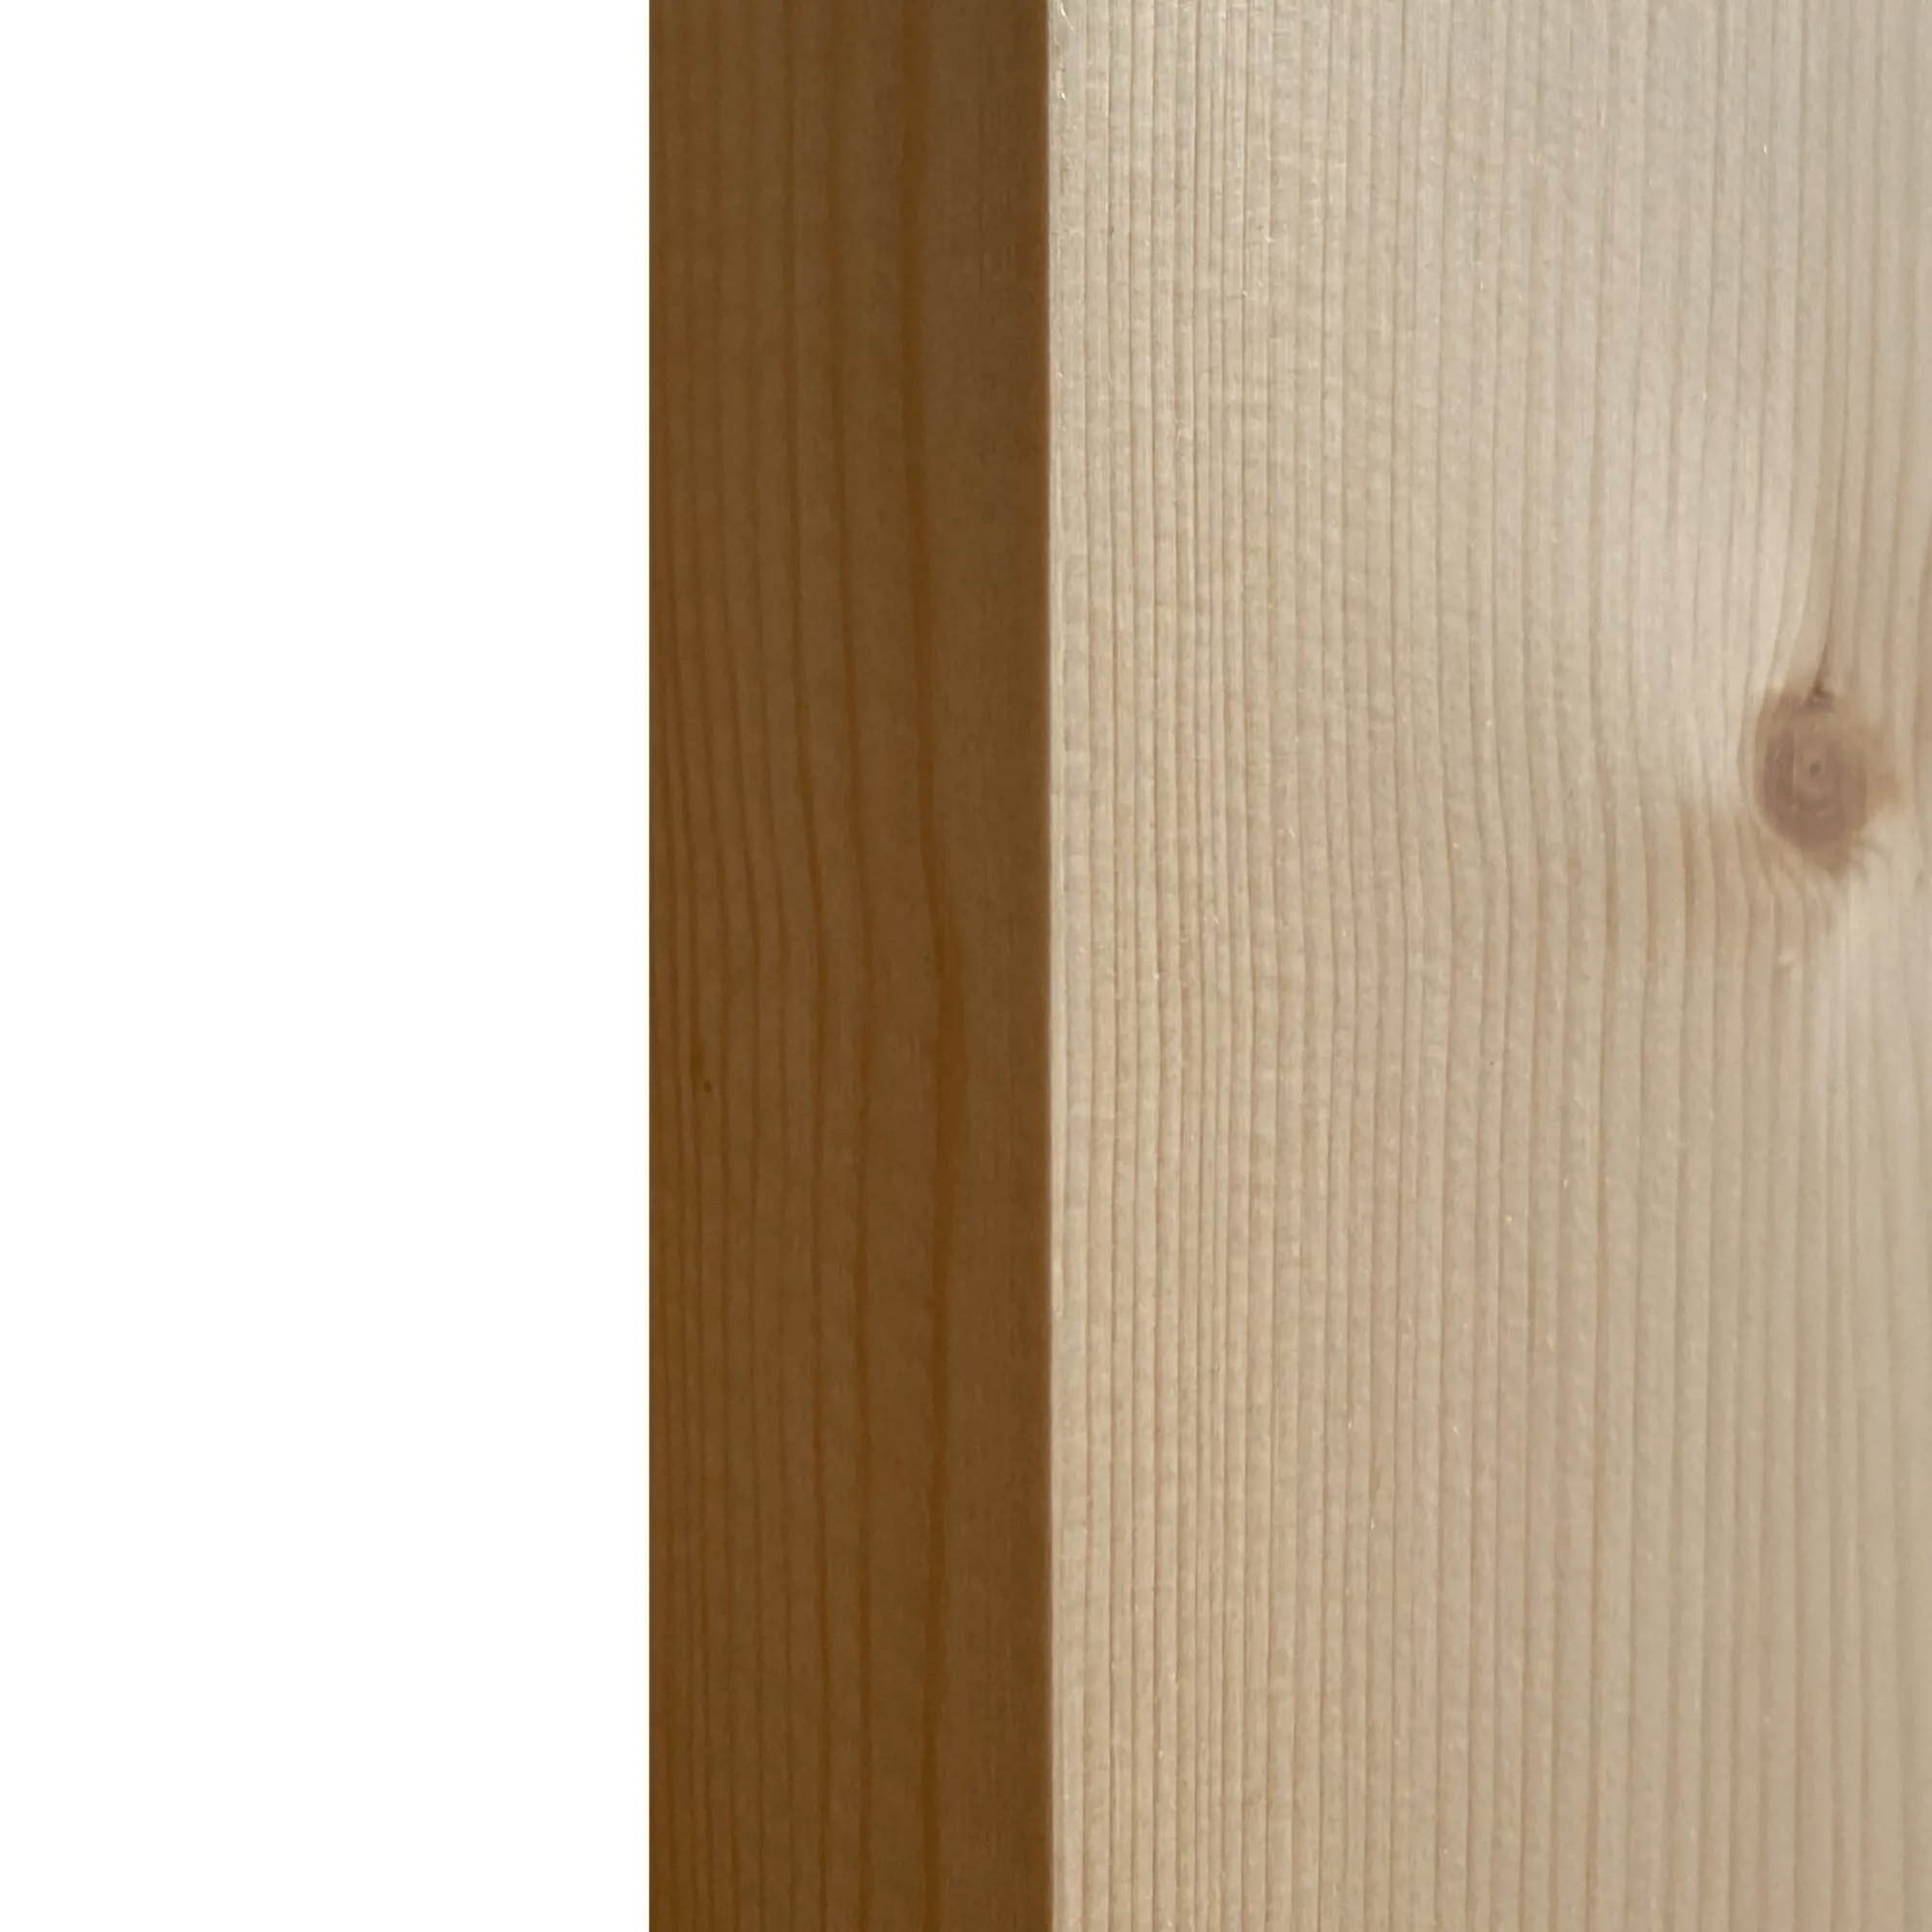 Apart.Unity Дверь деревянная амбарная межкомнатная из массива хвоя 700*2000 мм, Глухая